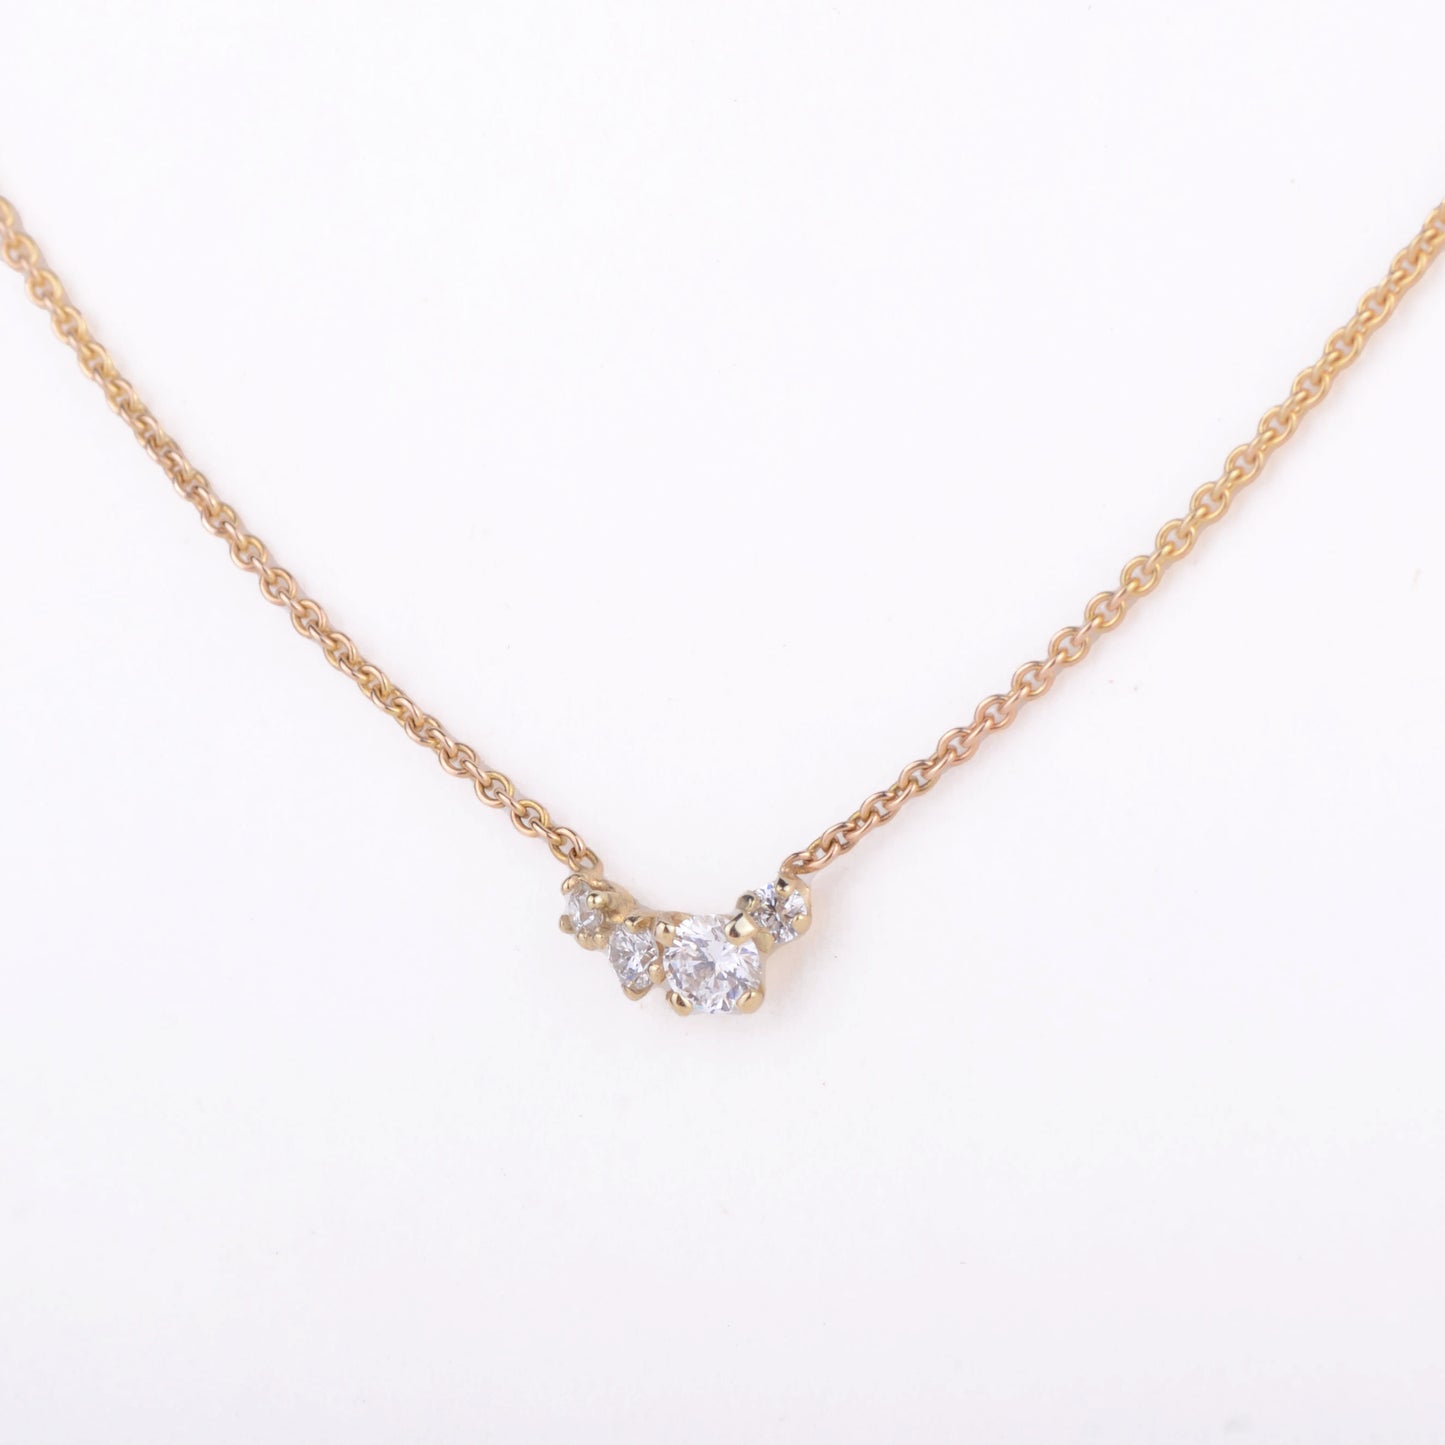 Necklace 14k diamonds are a girl's best friend